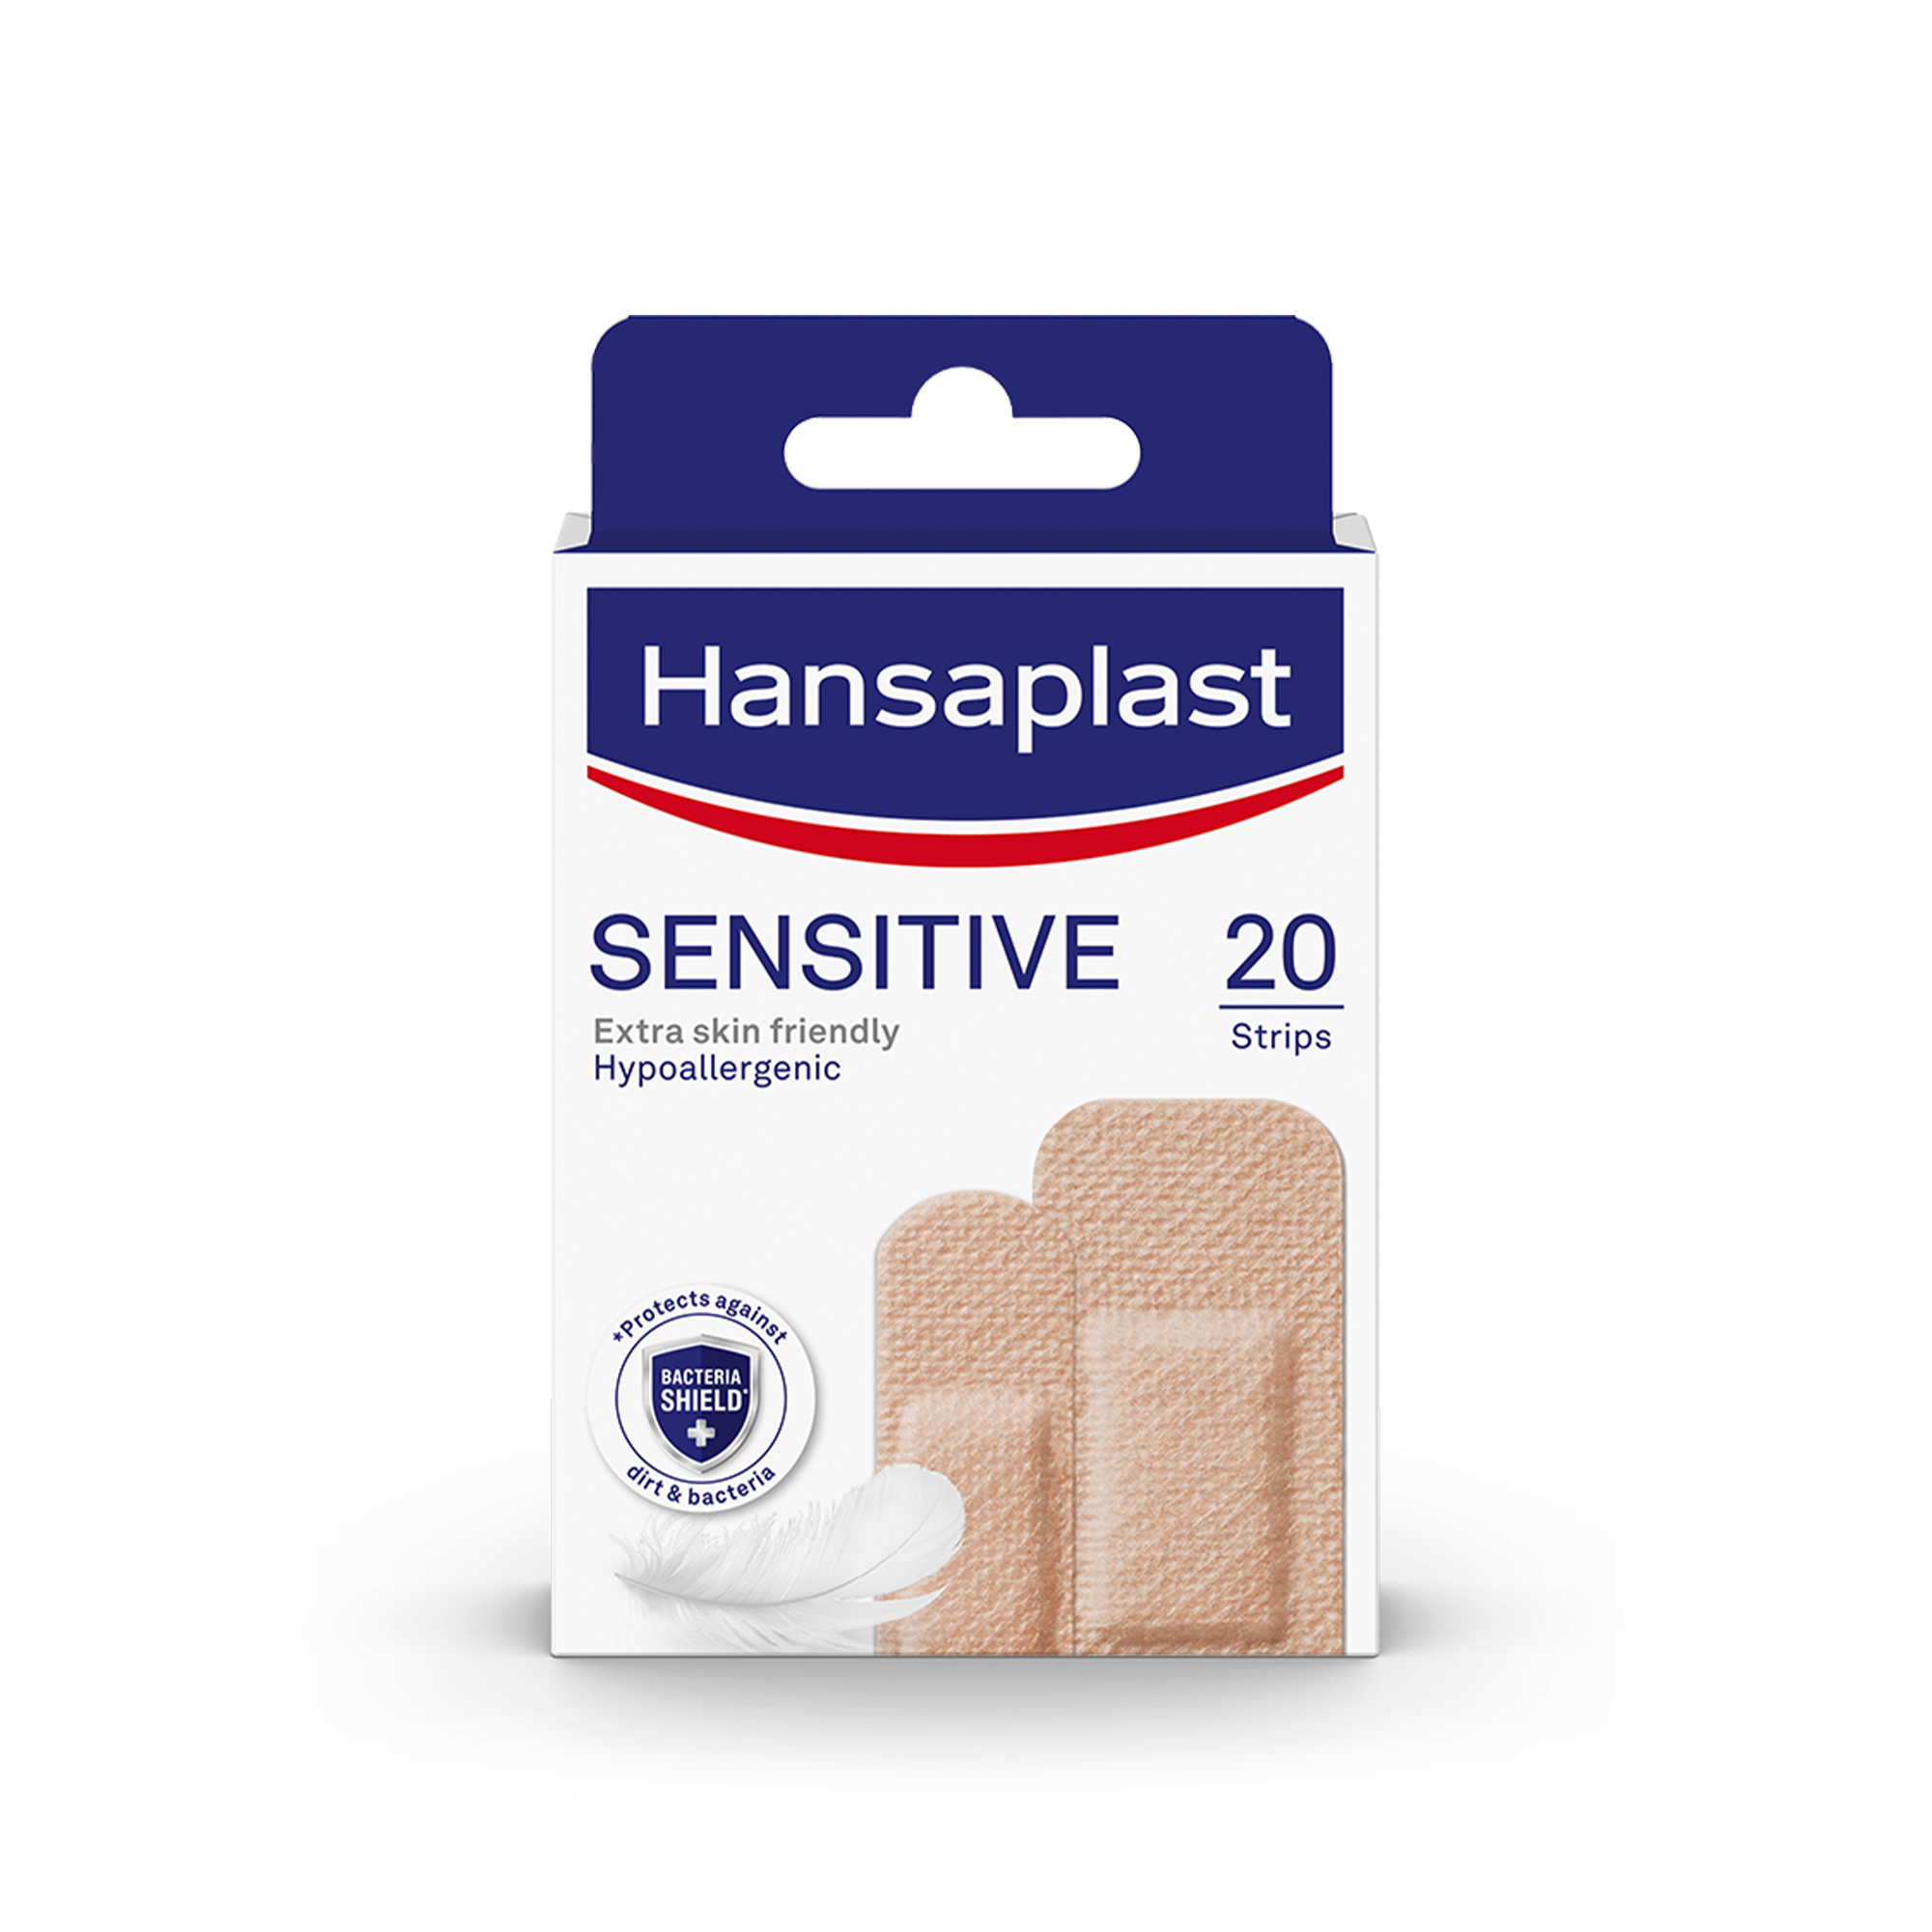 Hansaplast sensitive flaster